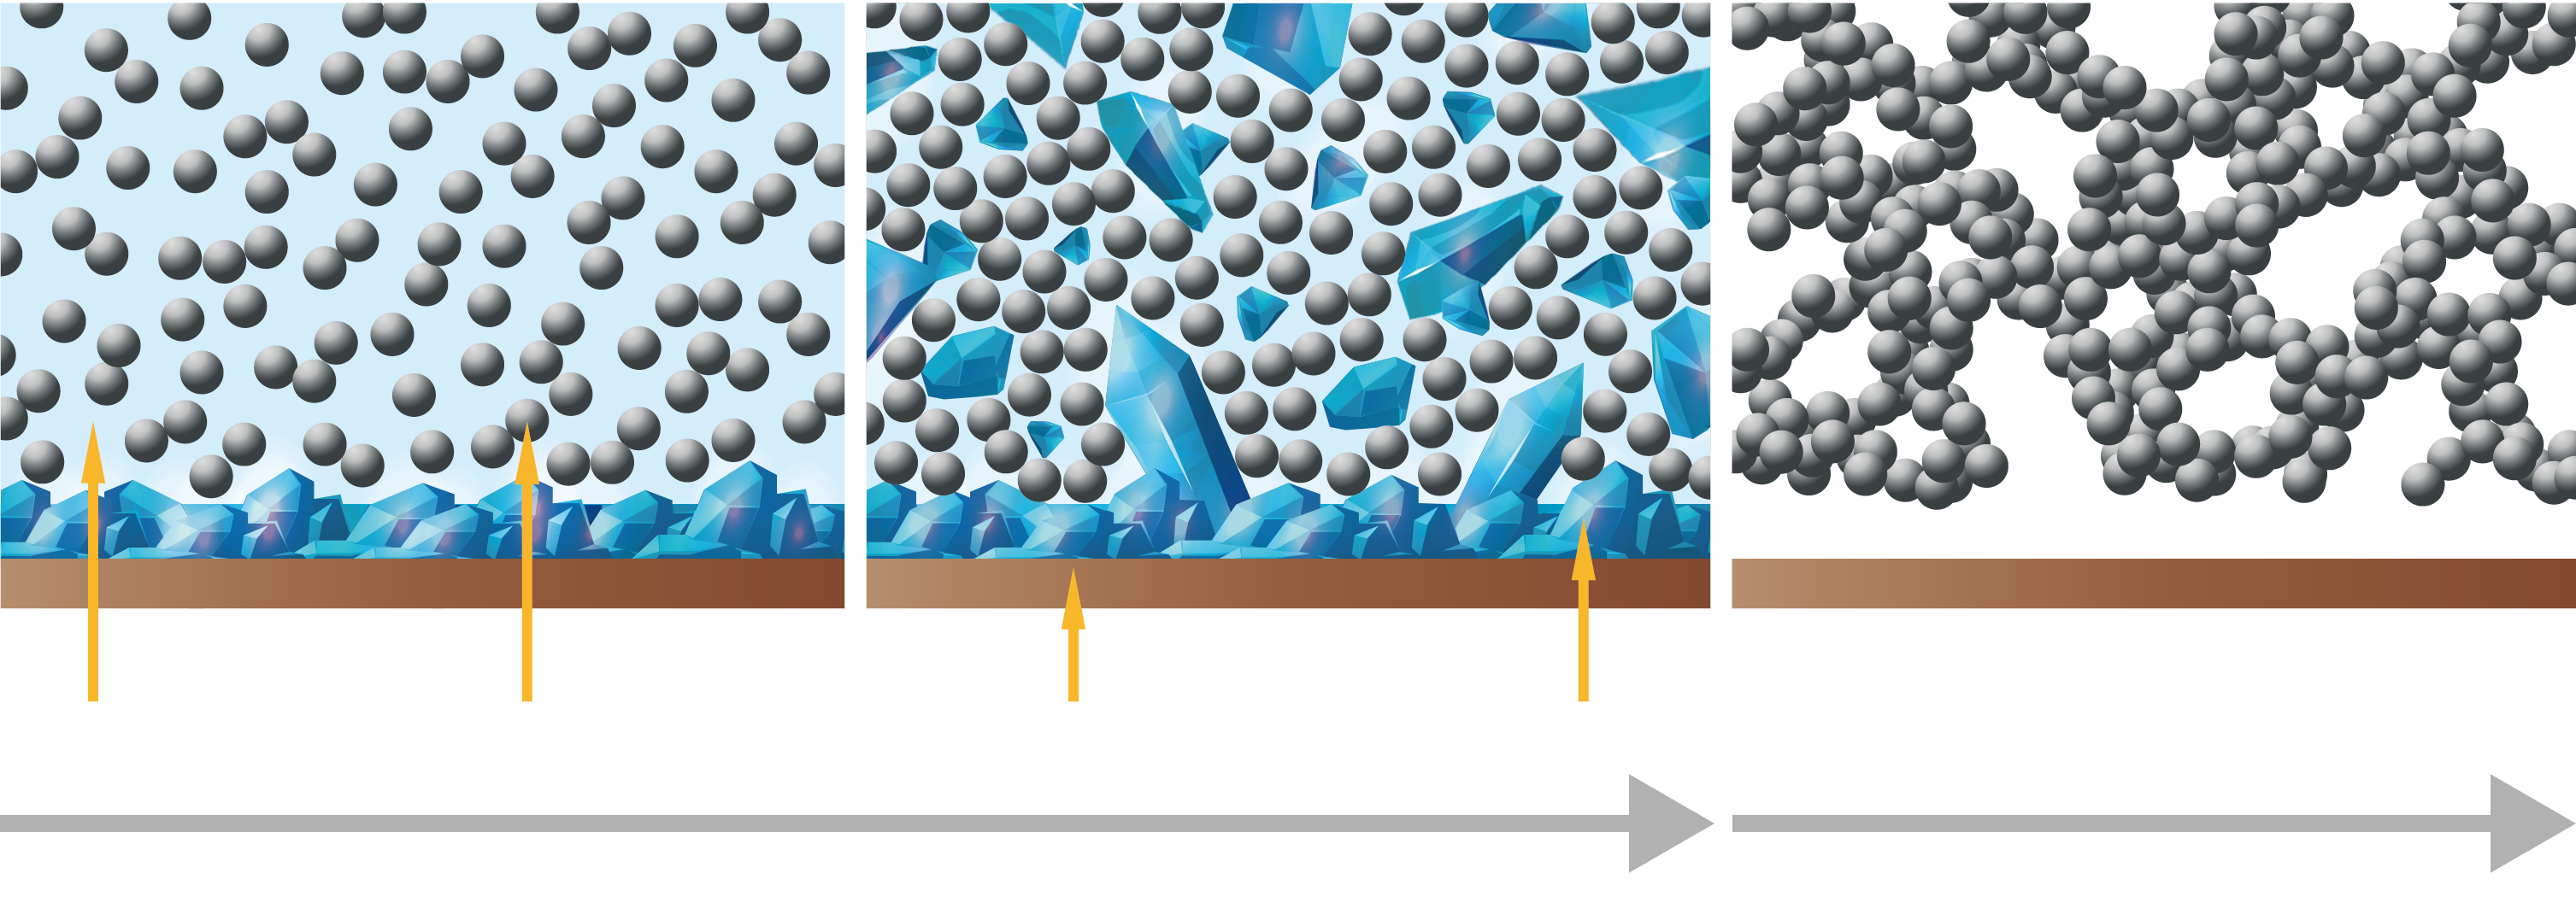 CryoStruct™ freeze casting technique